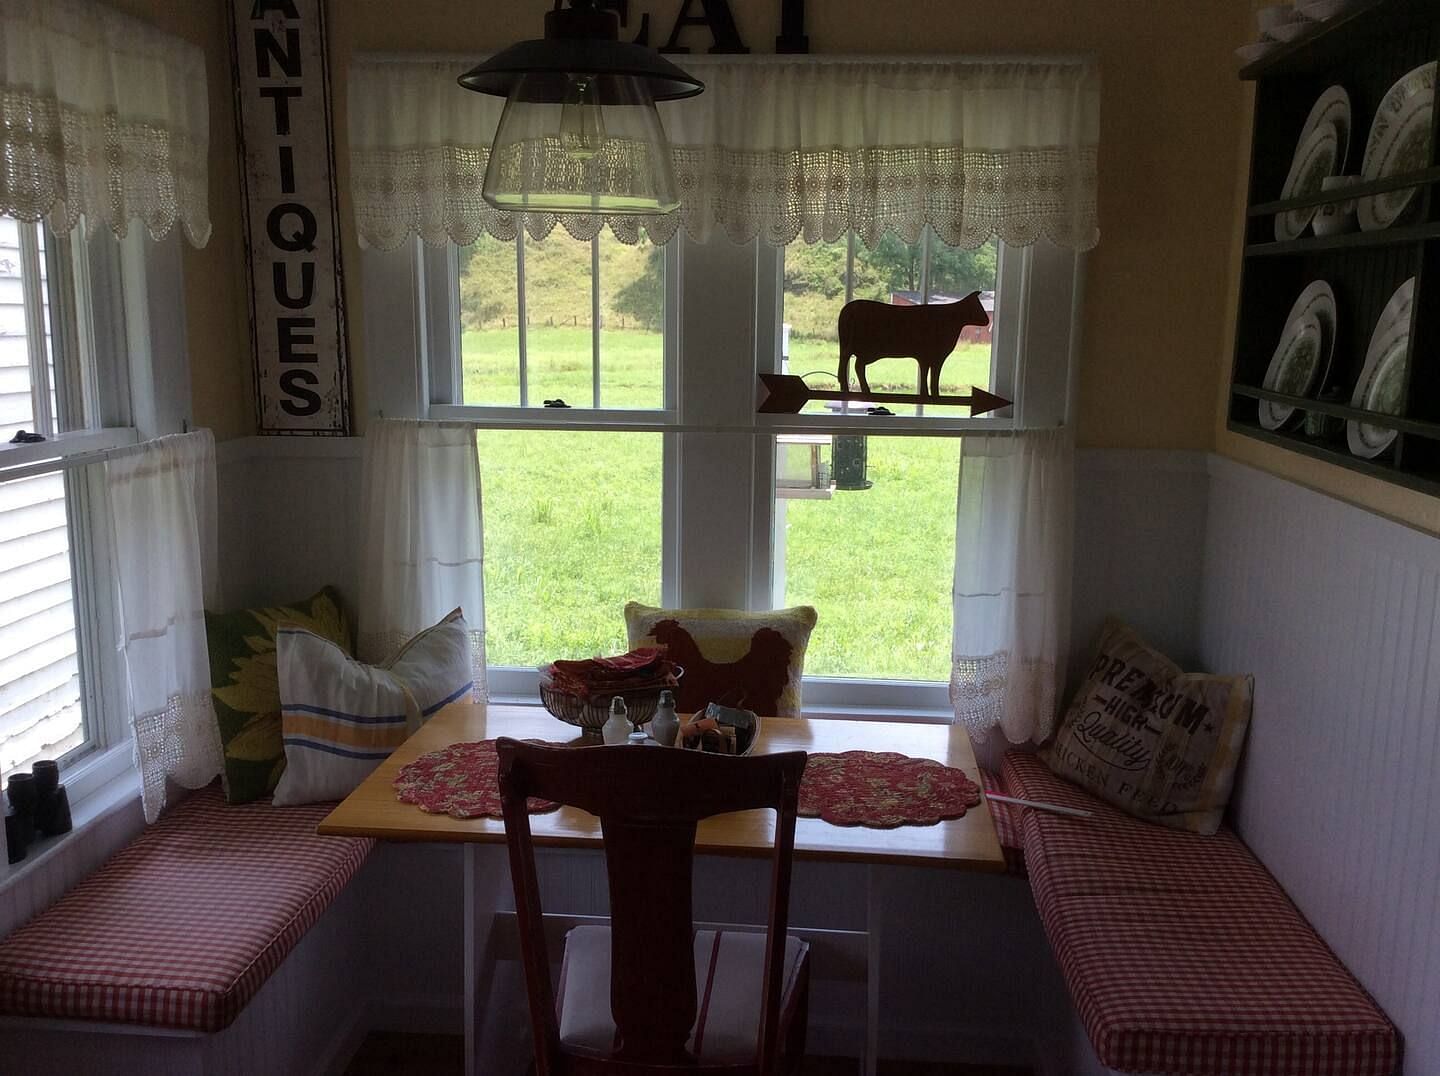 JWguest Residential Home at LeRoy, West Virginia | The Farm - Cozy Cottage | Jwbnb no brobnb 19